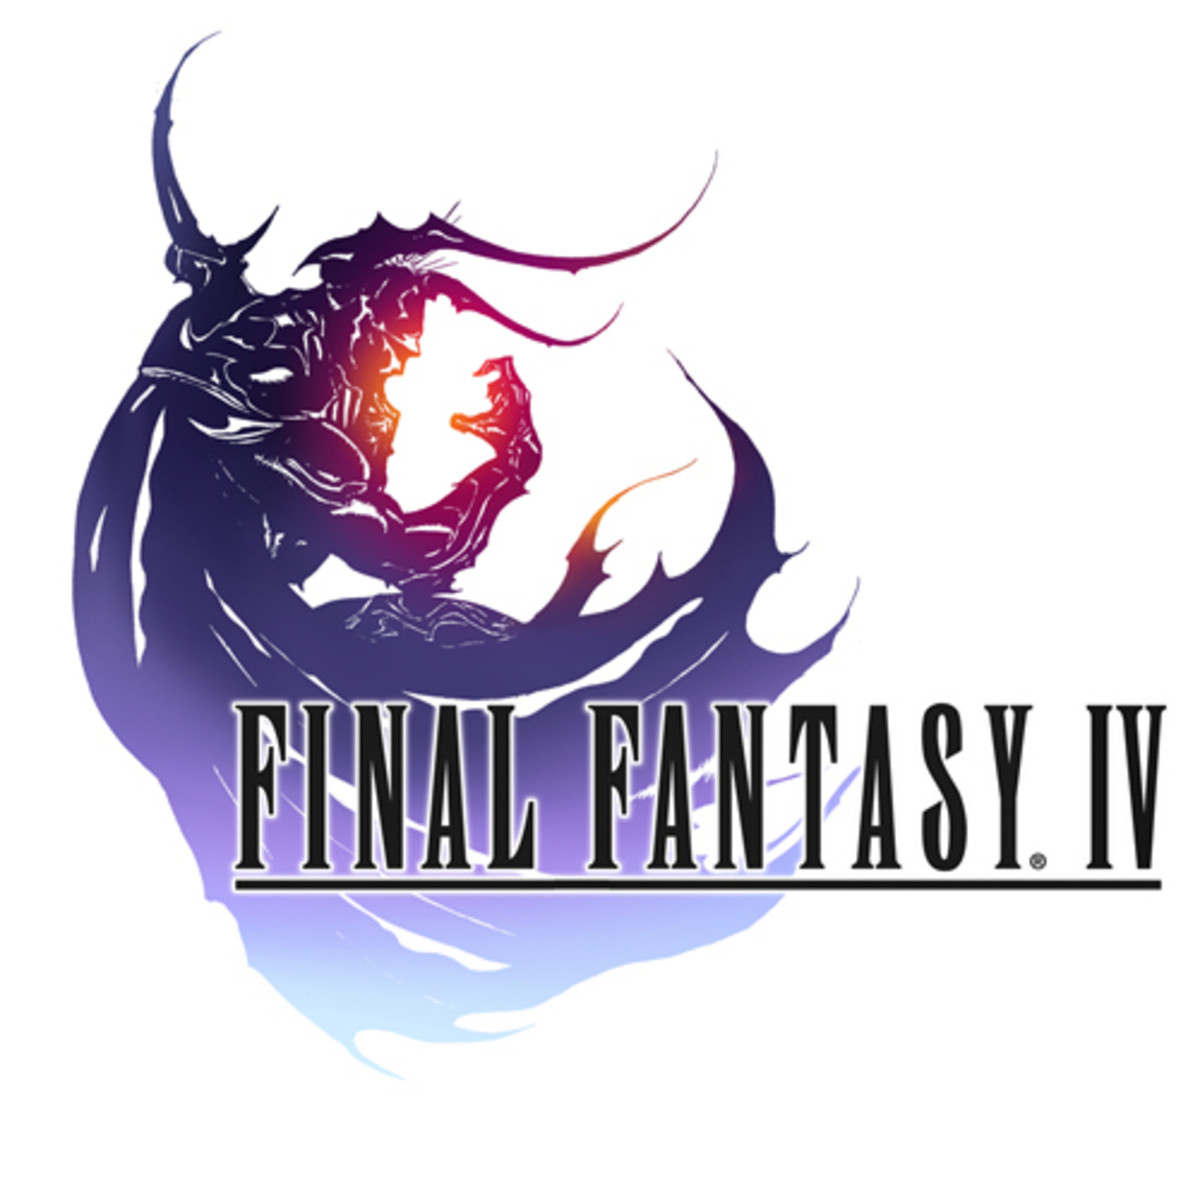 Final Fantasy IV logo.